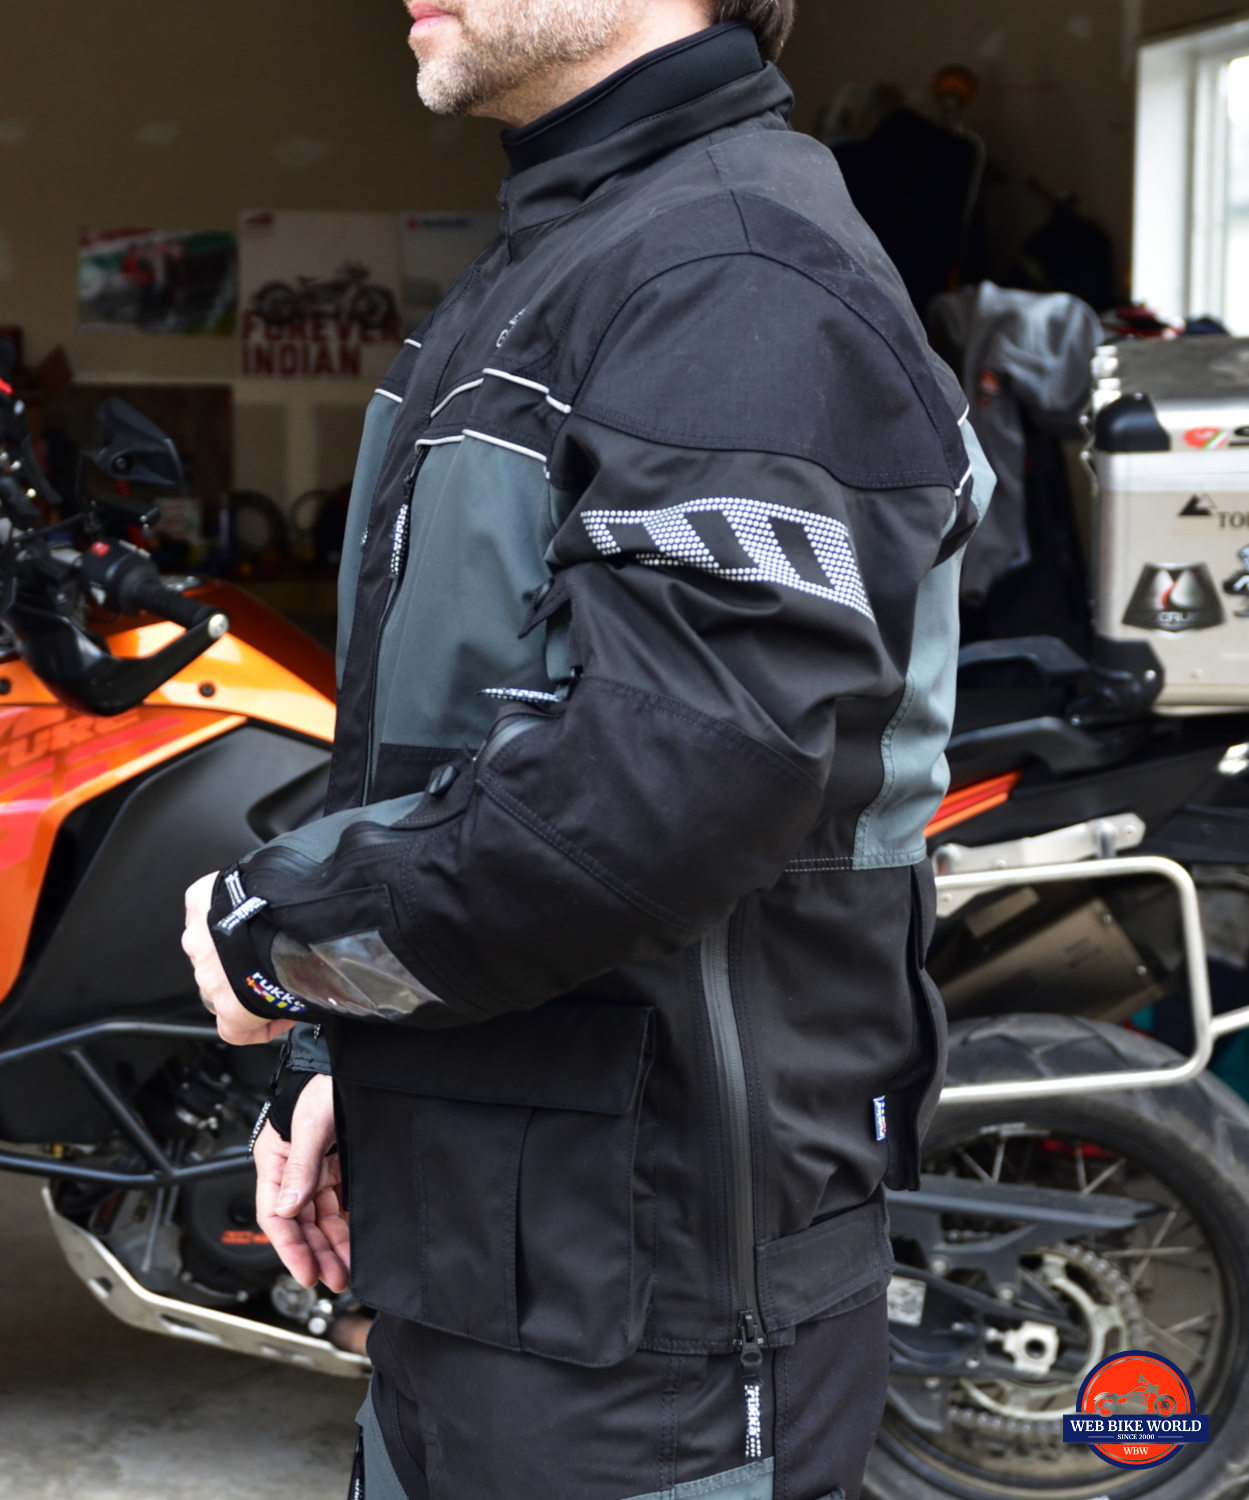 Rukka ROR Jacket: Really Outstanding Riding Gear